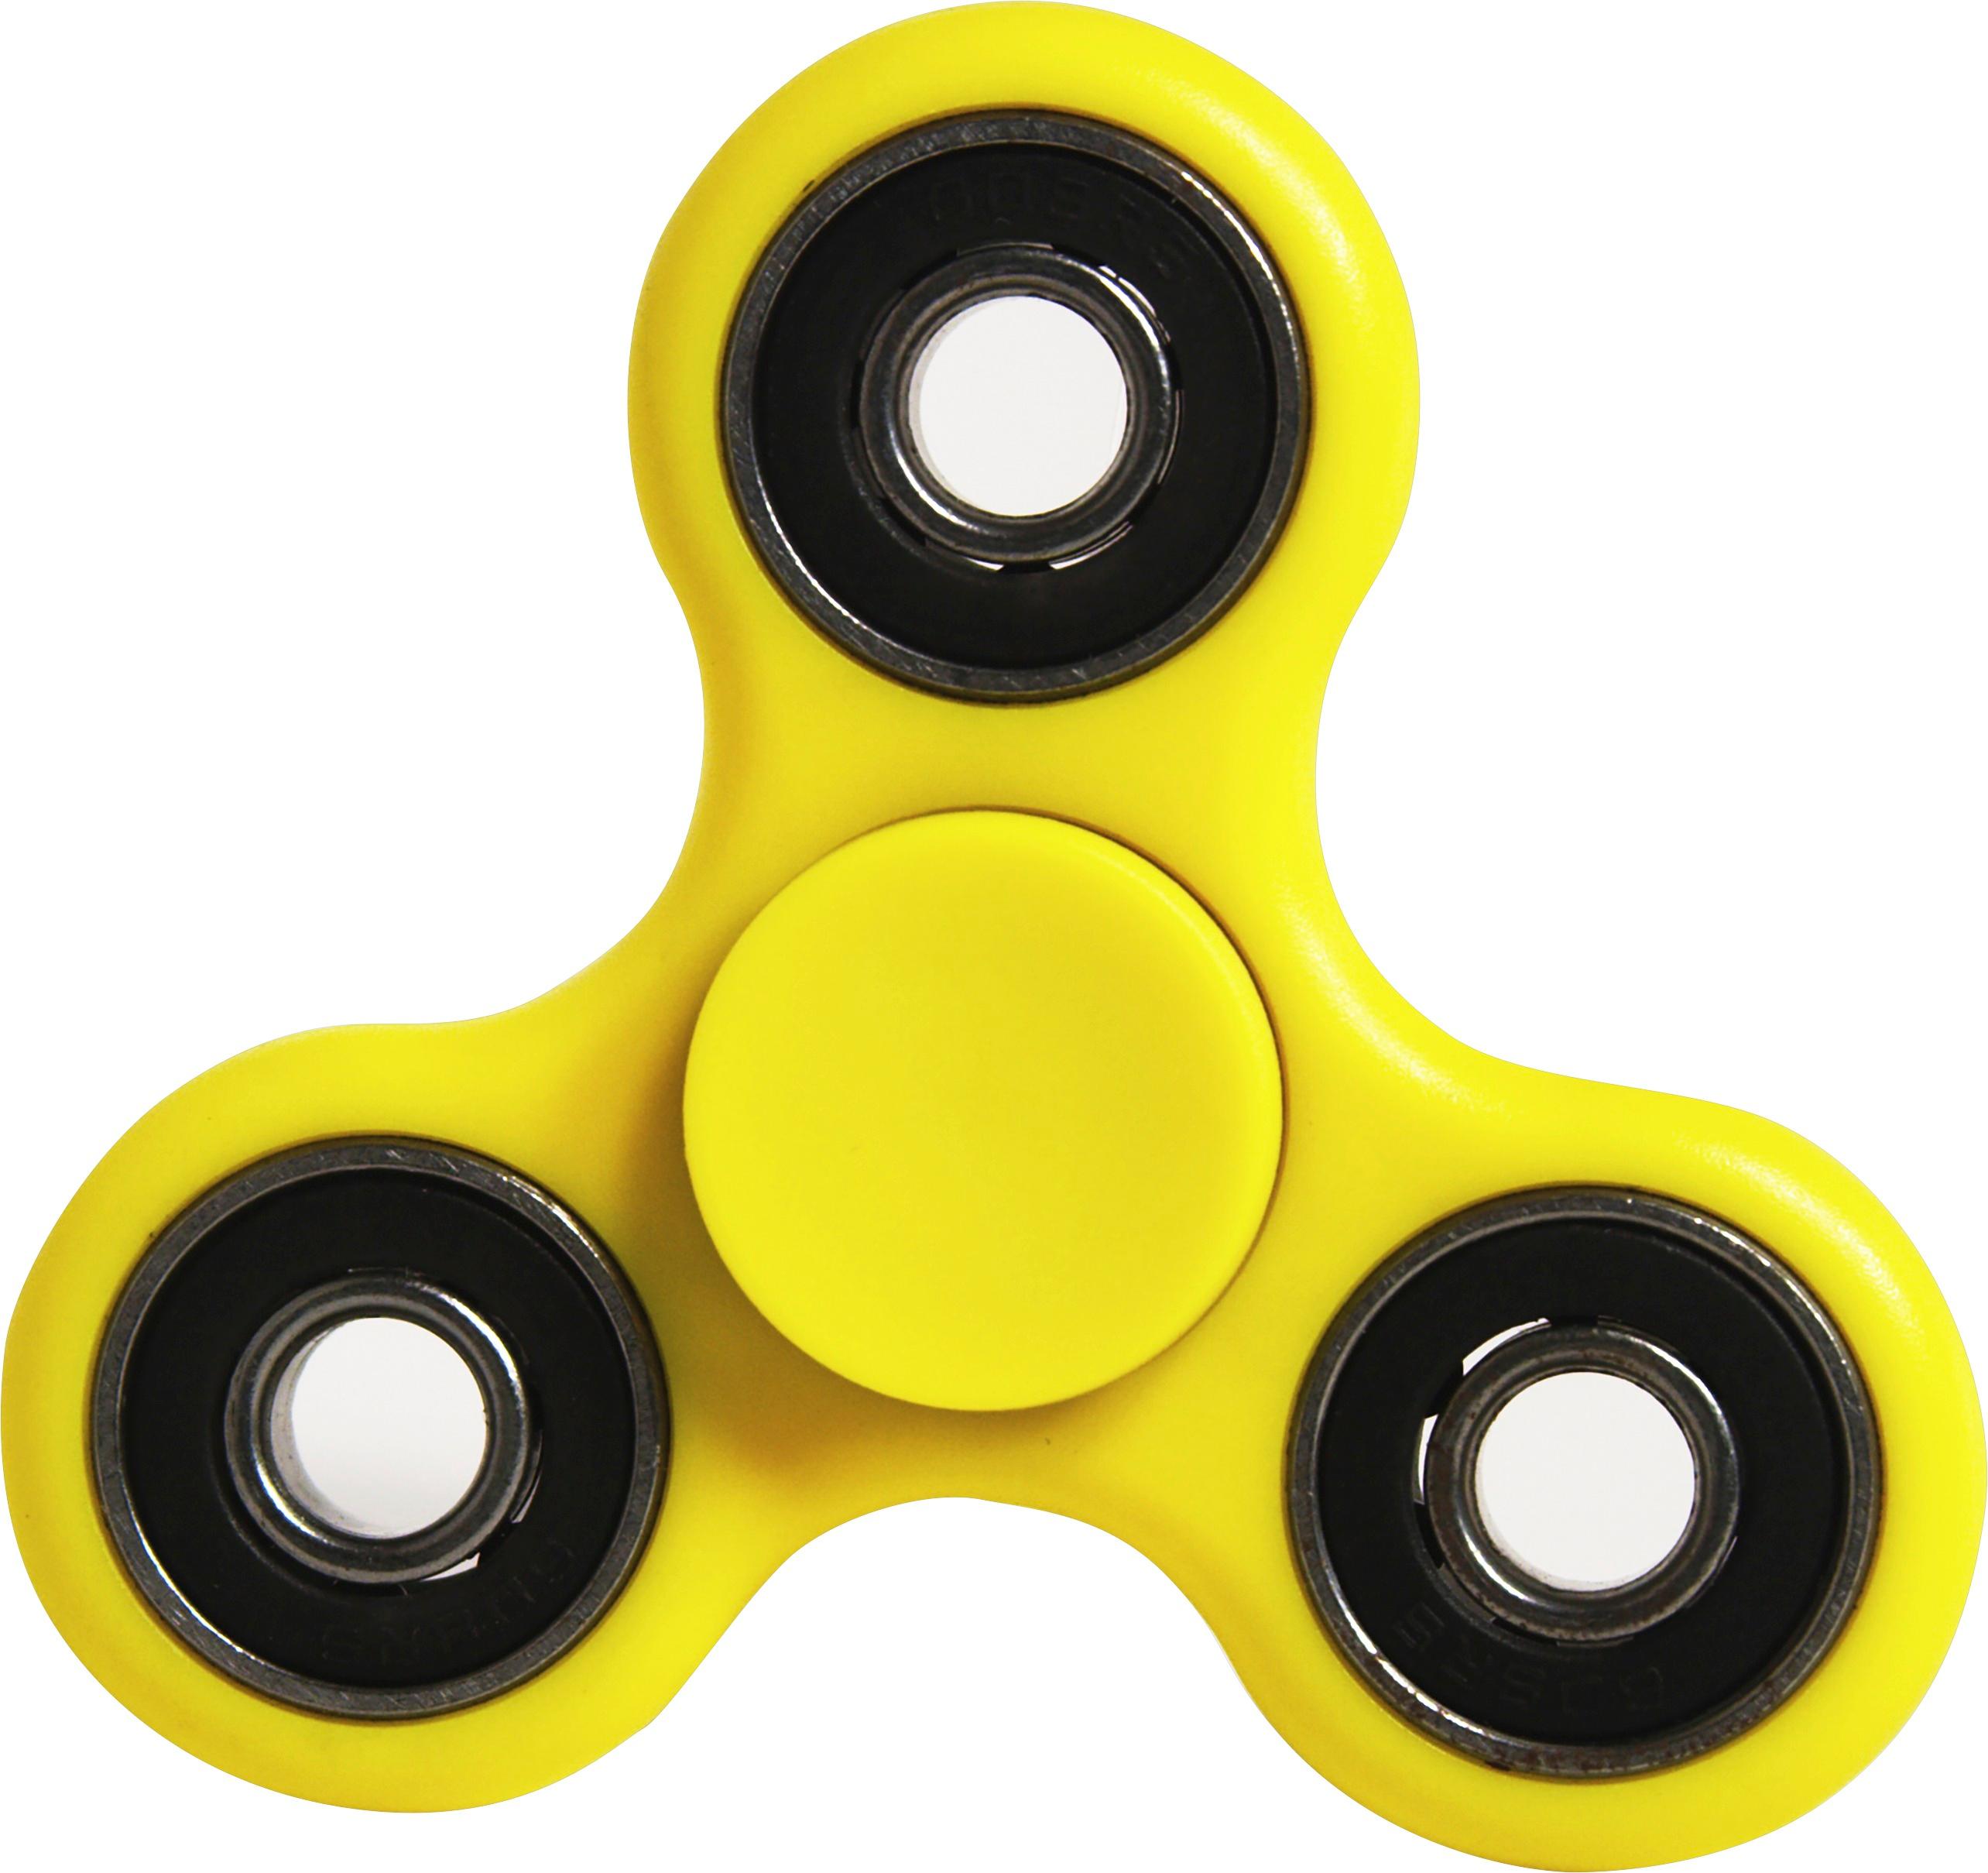 knude tidevand Selvrespekt Best Buy: Fidgetly Fidget Spinner Toy Stress Reducer Yellow/Black 5016